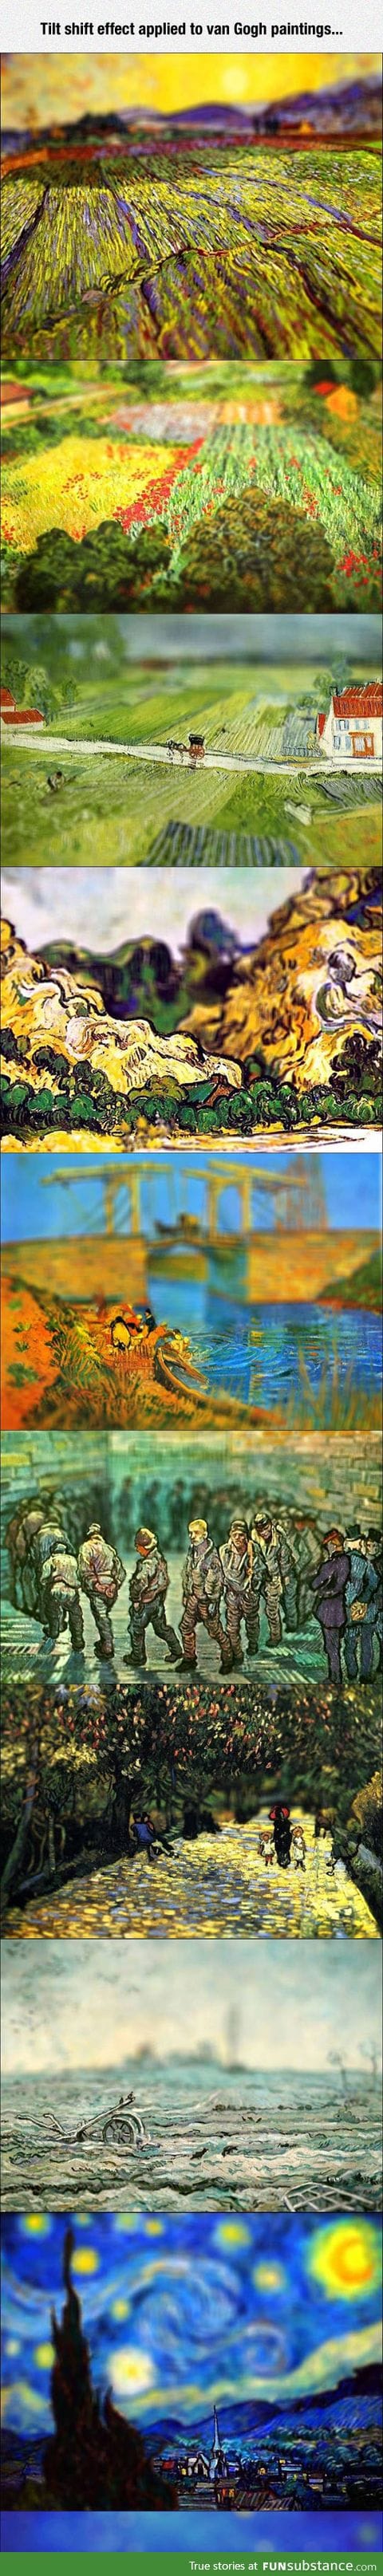 Viewing Van Gogh's work with a tilt-shift lens